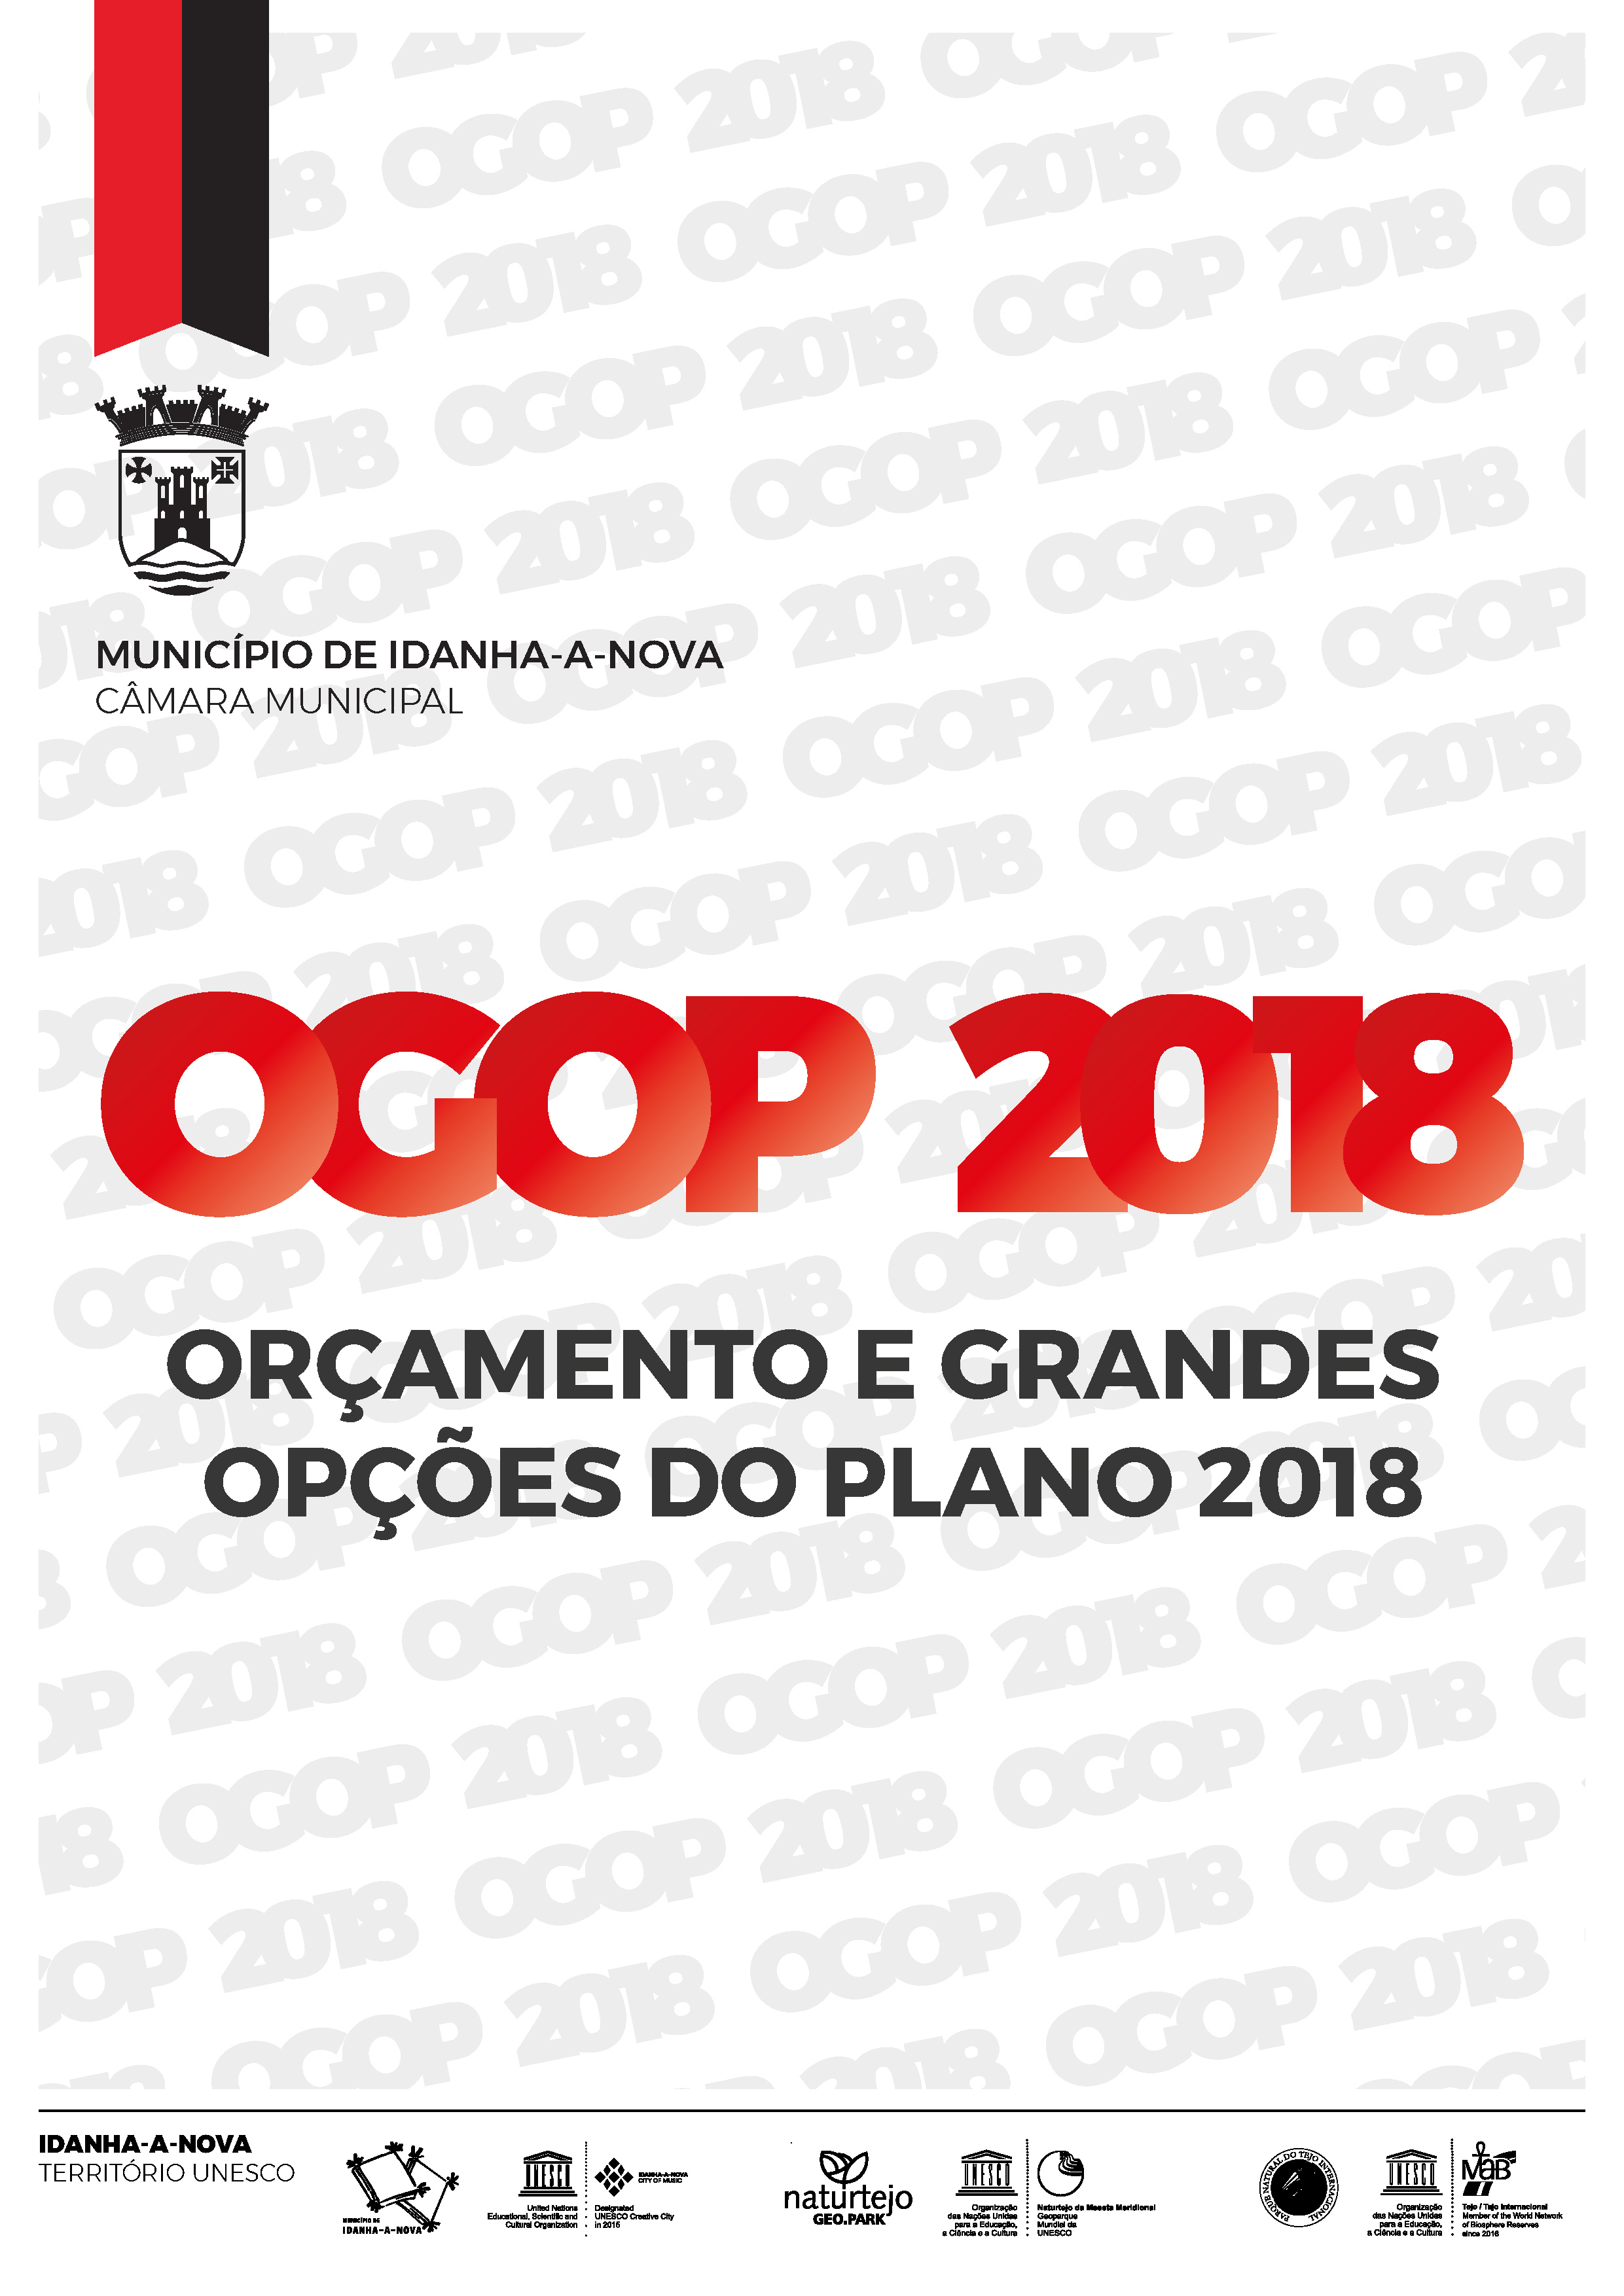 Ogop 2018